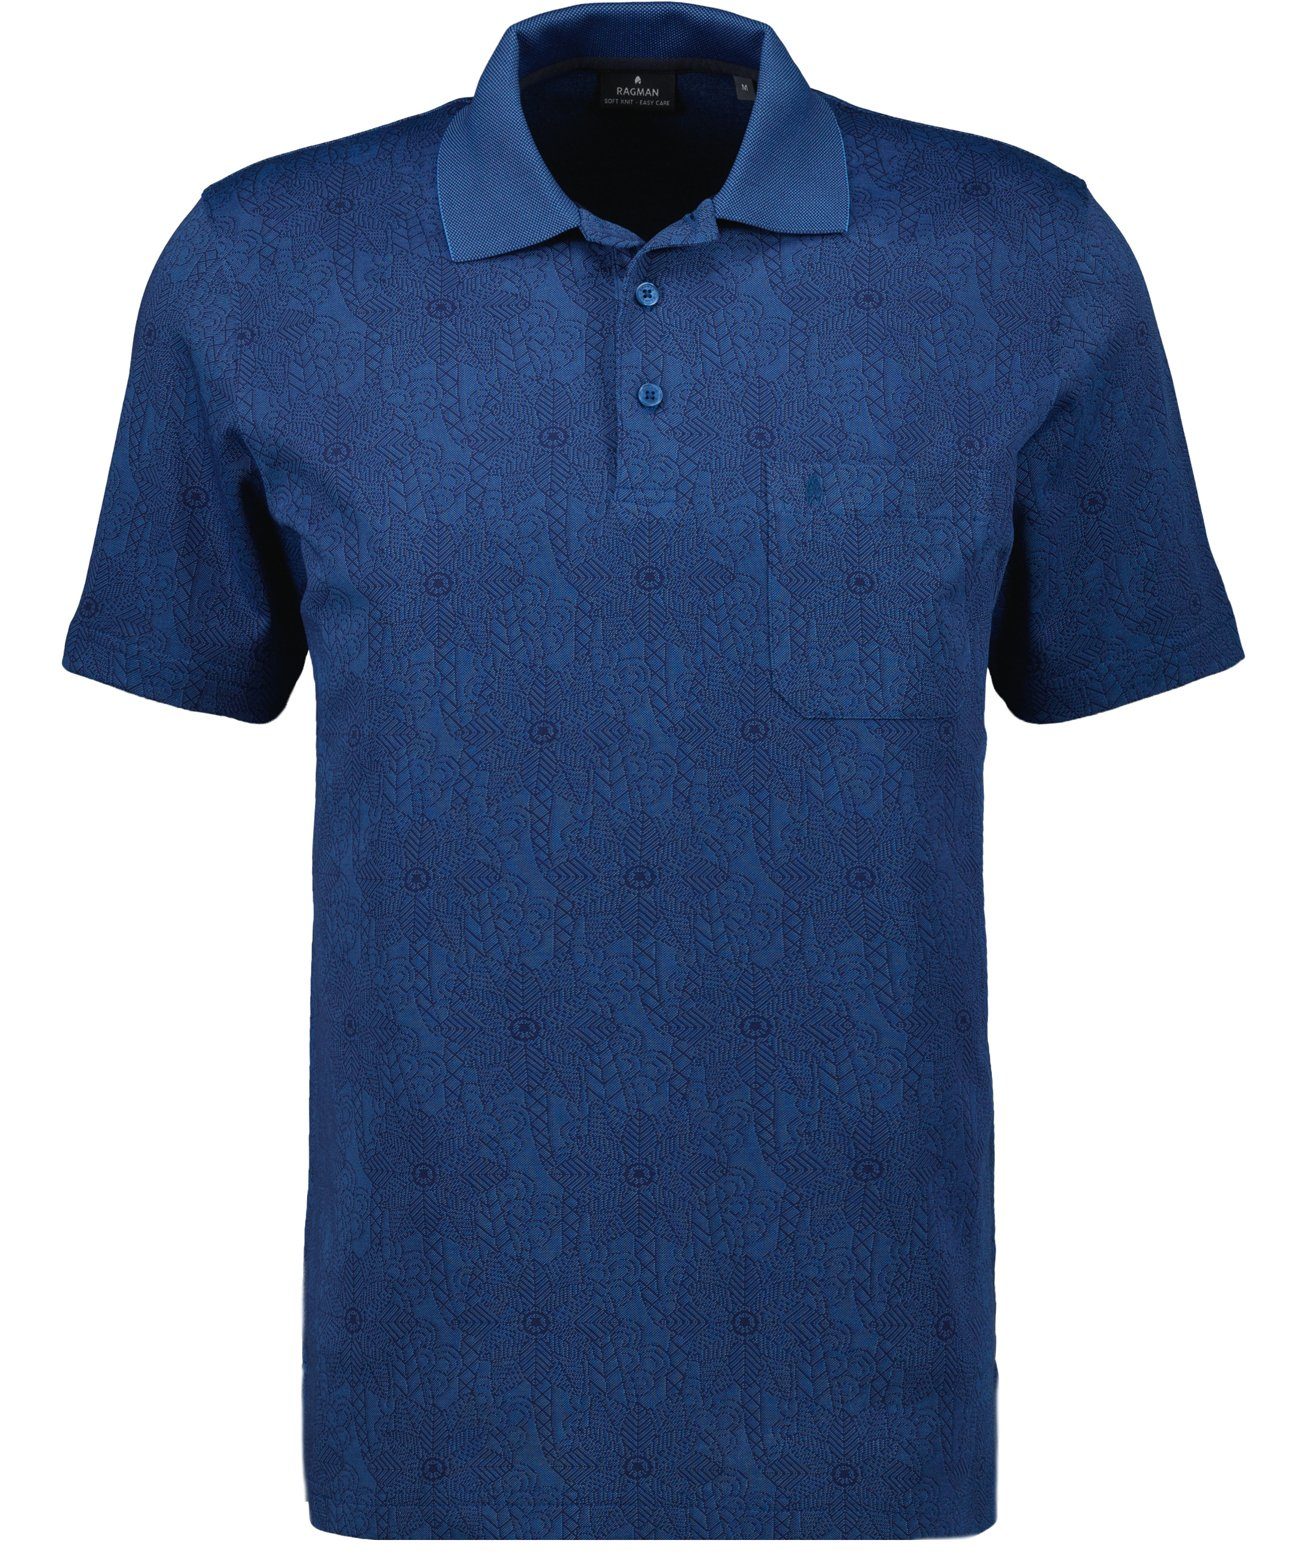 RAGMAN Poloshirt Softknit-Polo Jacquard mit Brusttasche blau-melange